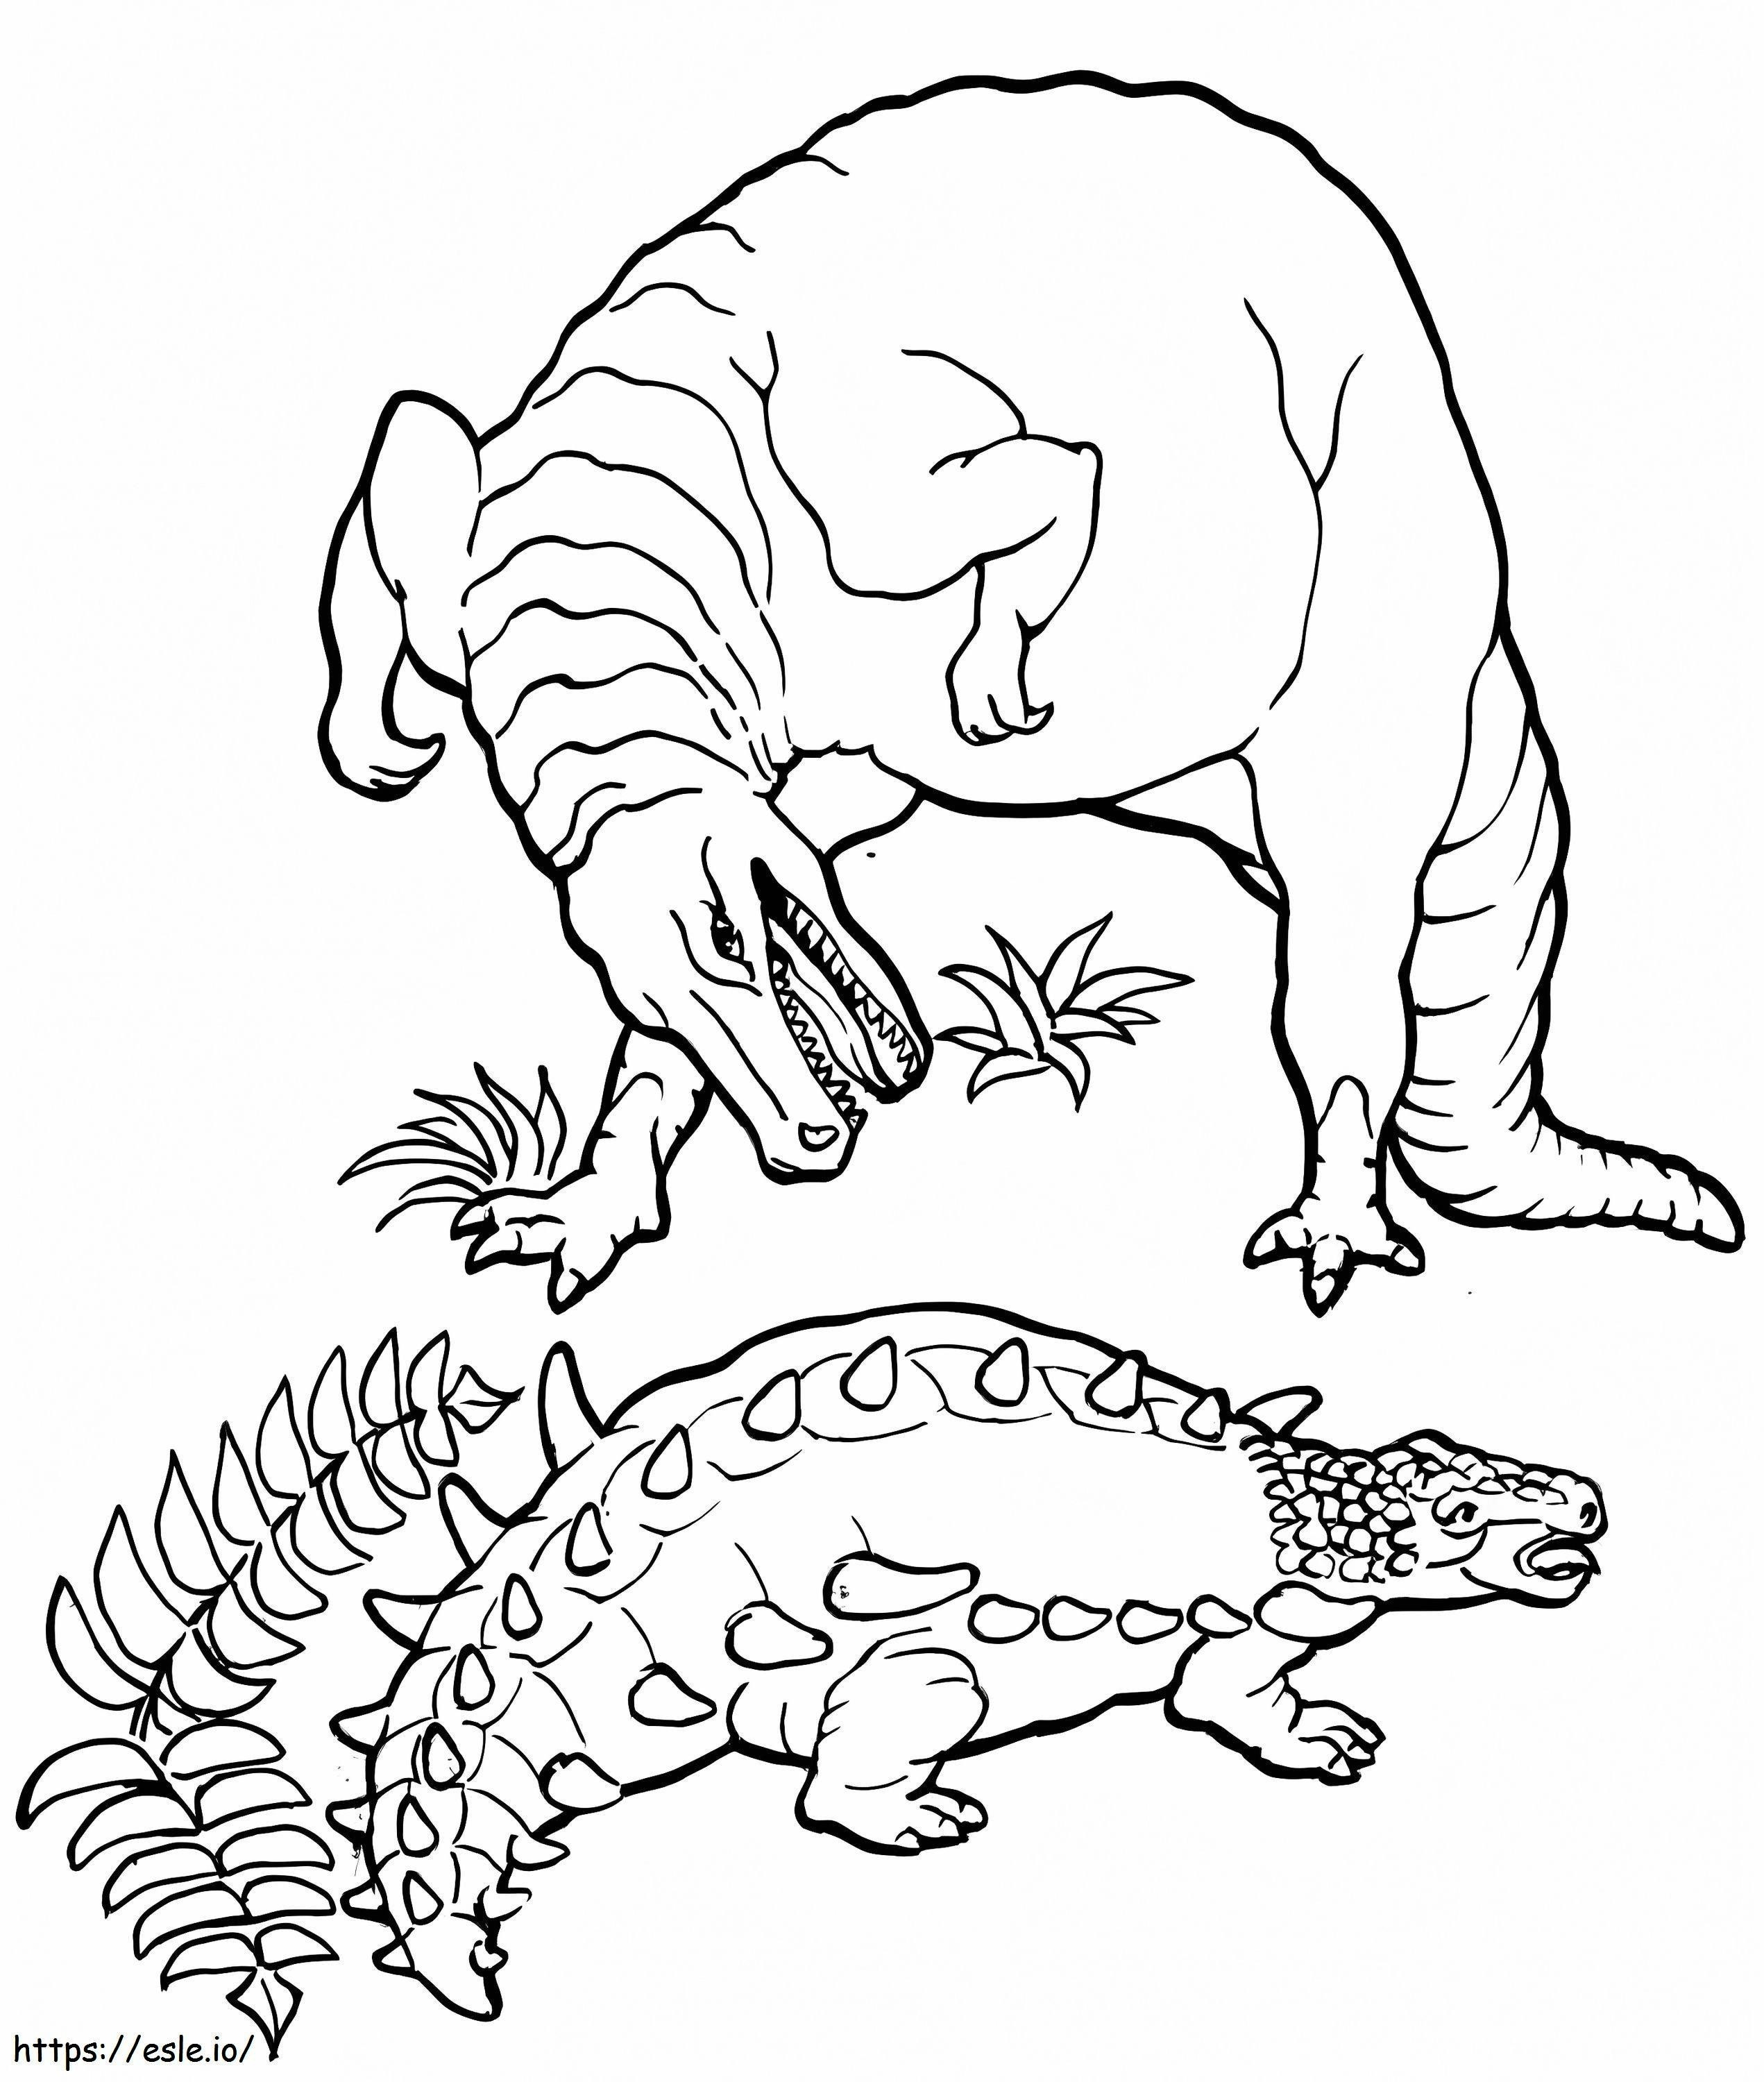 Ankylosaurus ve T Rex boyama